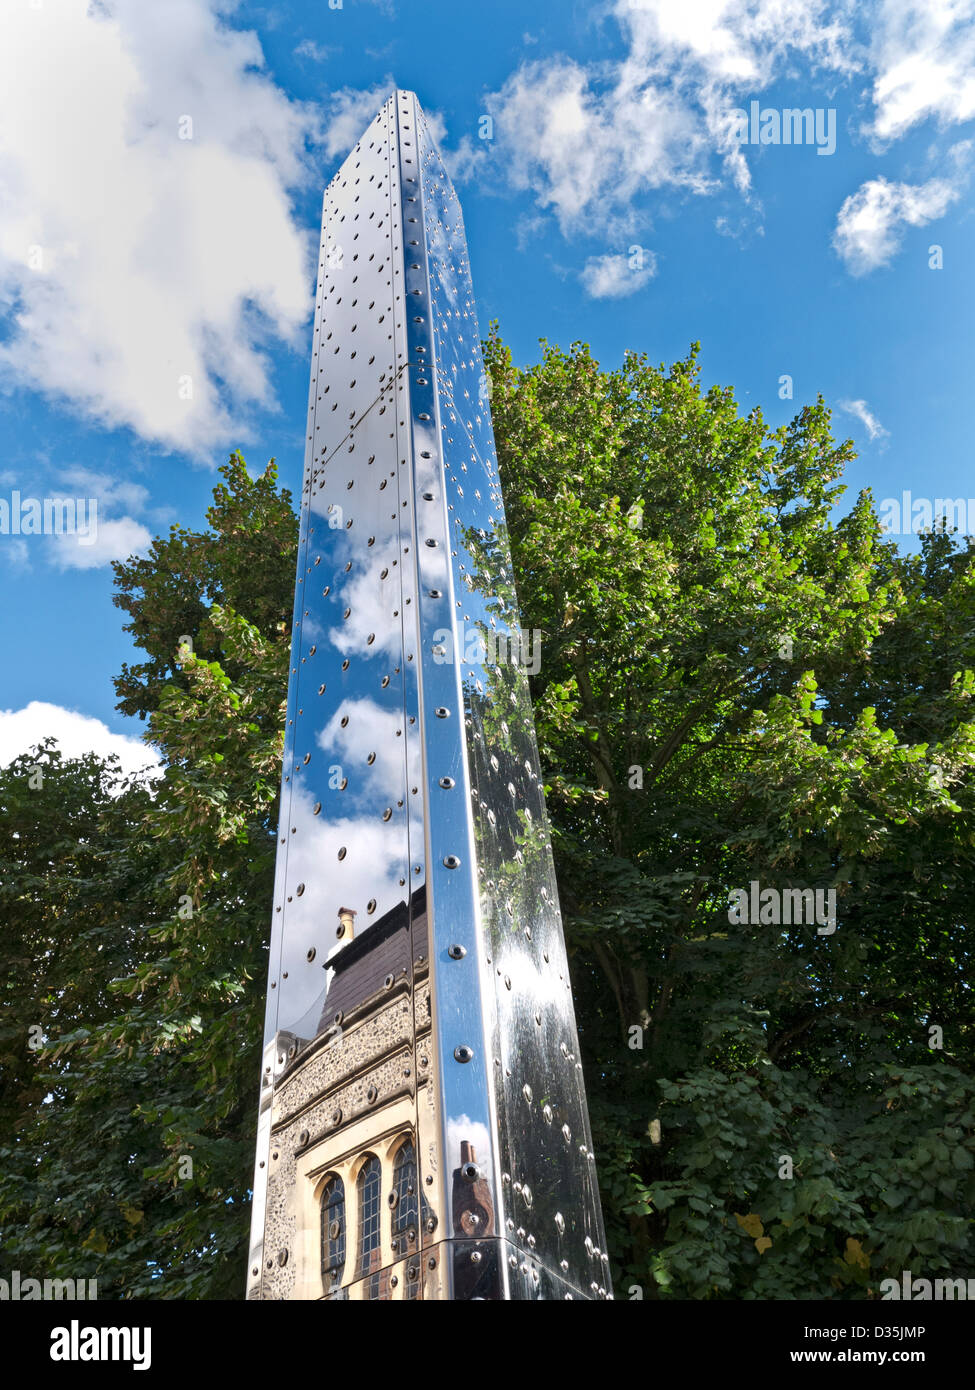 Peter Freeman's torre metálica de luz luminosa "Motion" un arte público contemporáneo escultura en la Catedral de Winchester Hampshire UK Foto de stock